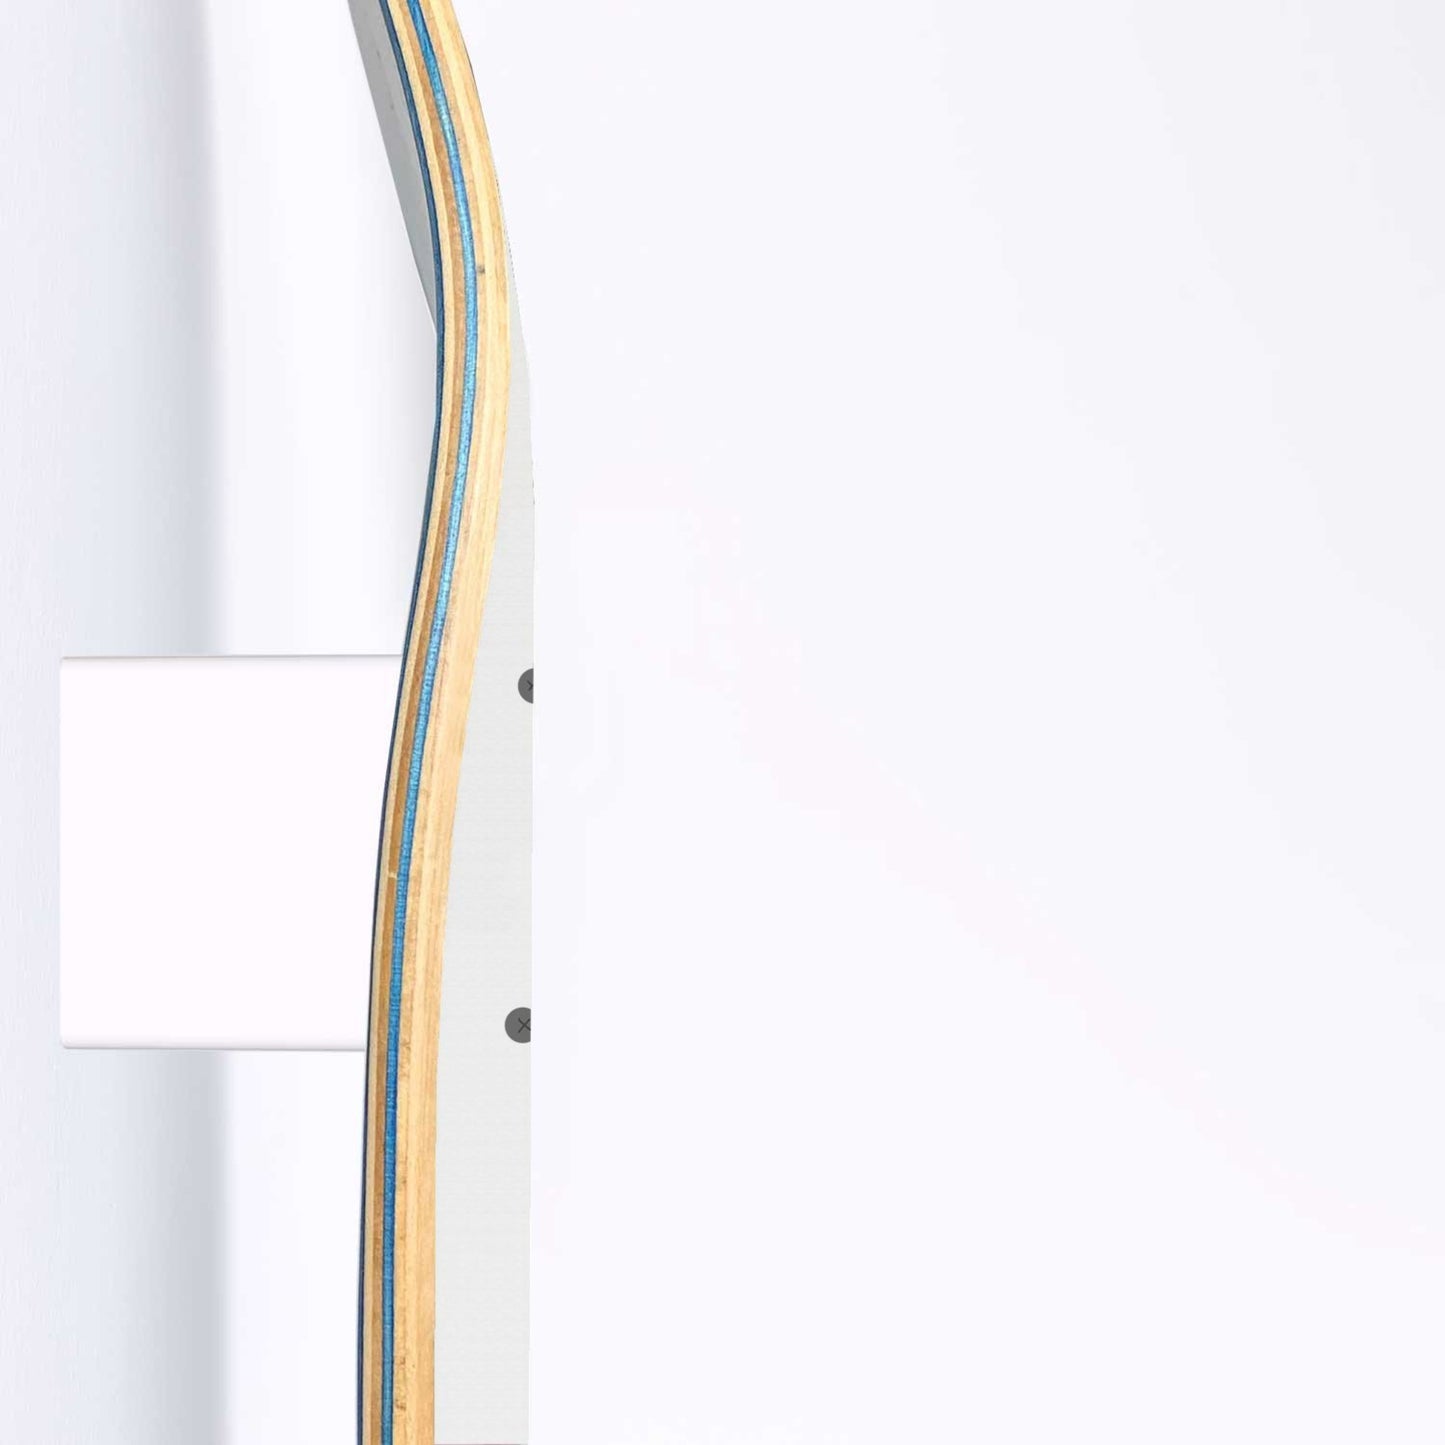 Fashion 9 | 3 Set of Skateboard Deck Wall Art | Wall Hanging Room Decor | Maple Wood | Birthday Gift